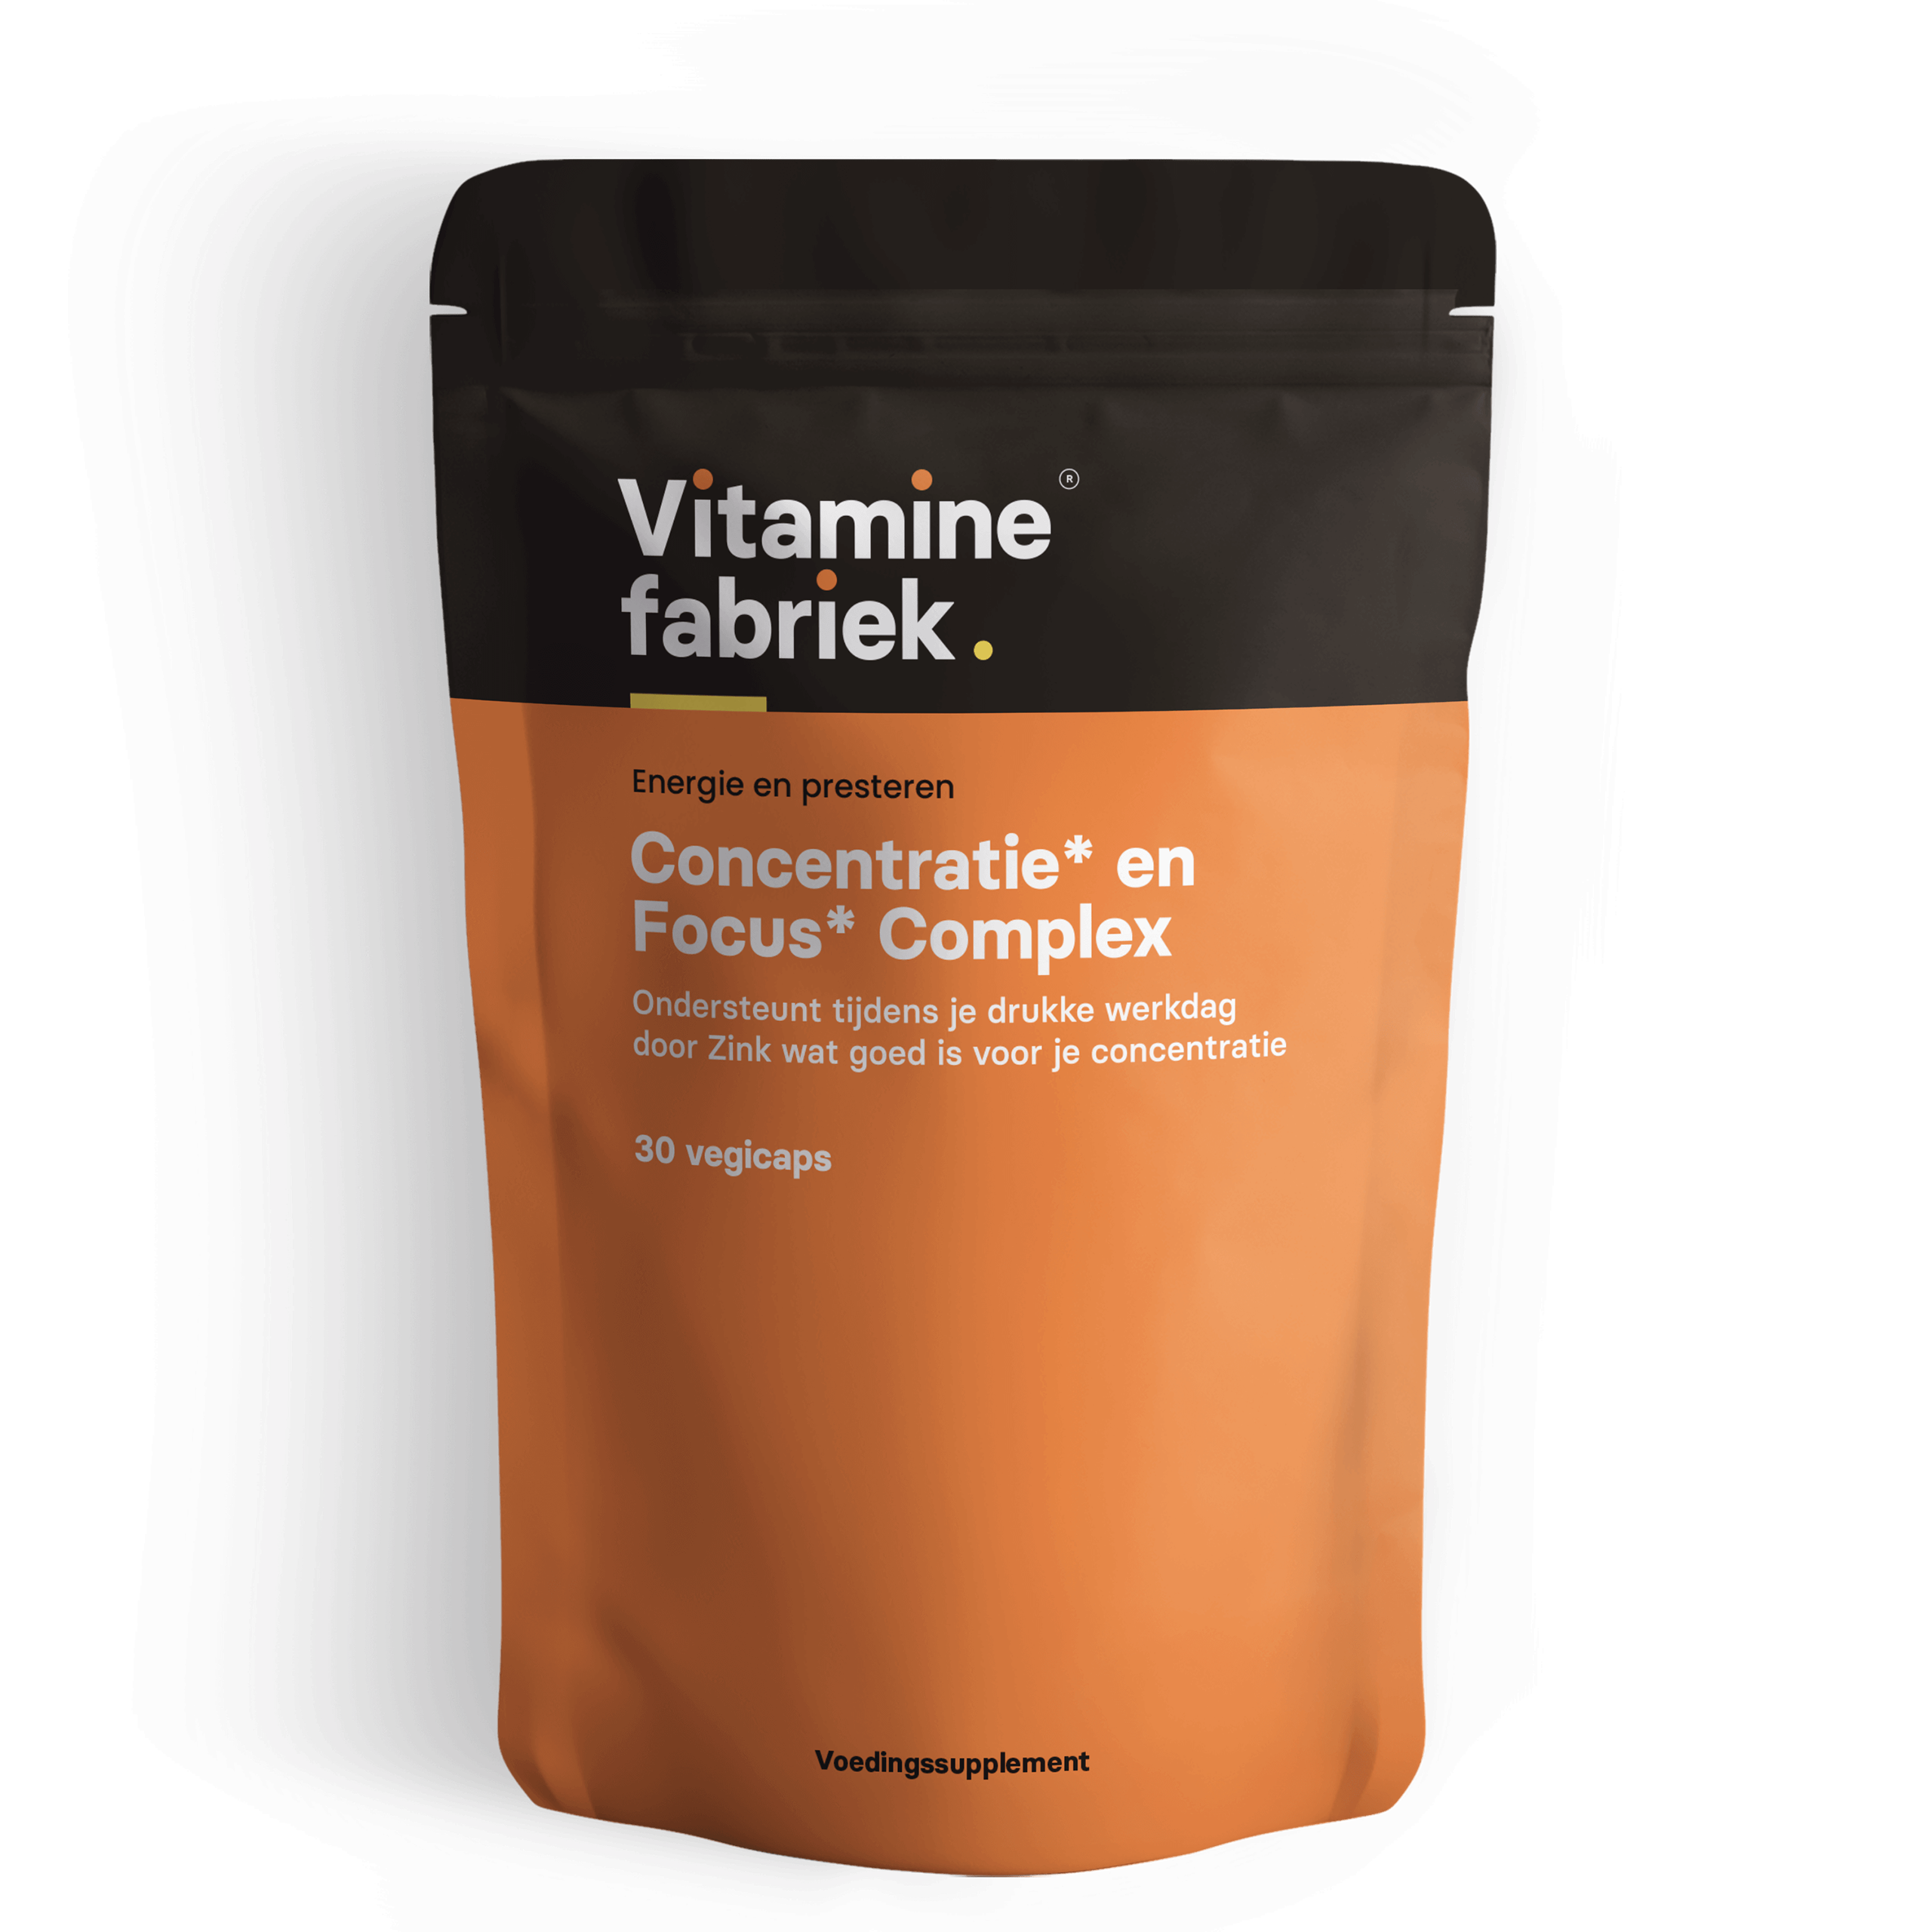 Concentratie* en Focus* Complex - 30 vegicaps - Vitaminefabriek.nl